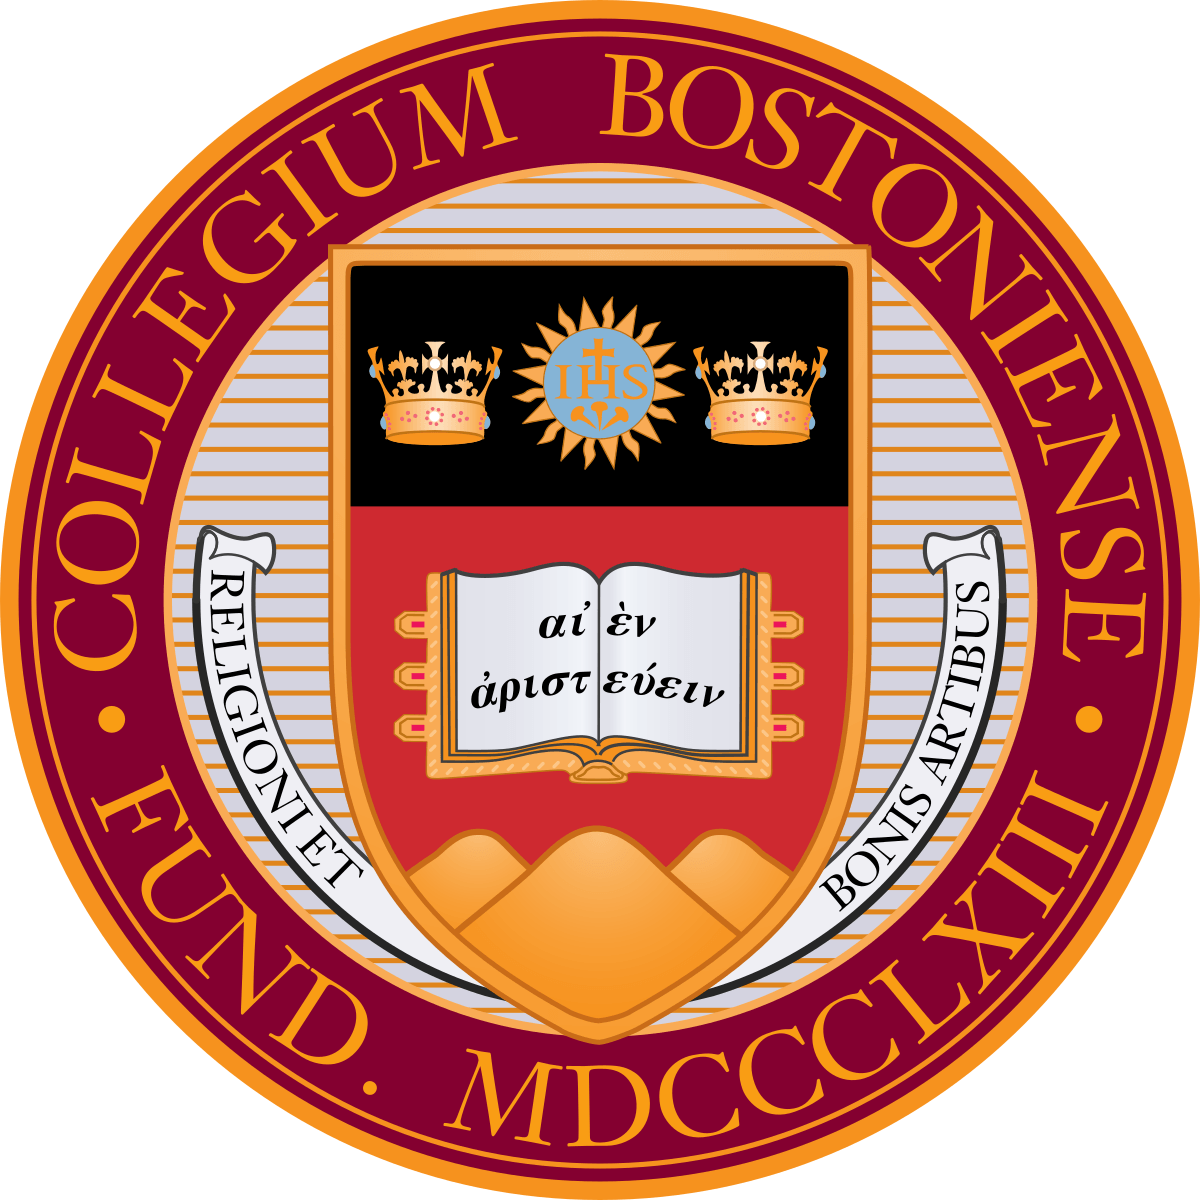 Well Known College Logo - Boston College